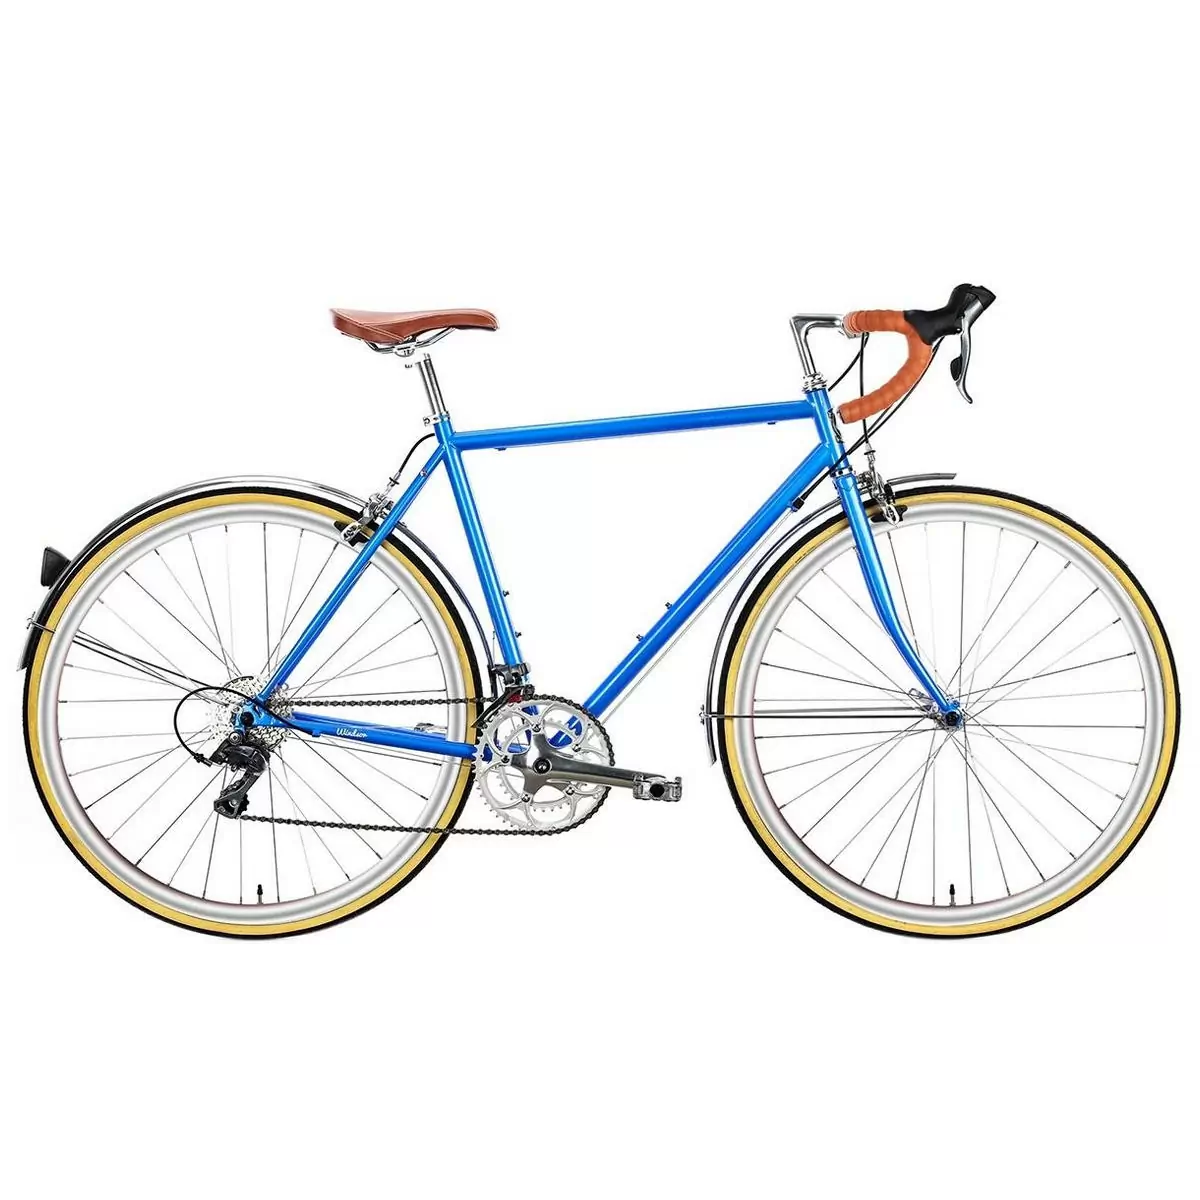 Bicicleta urbana TROY 16spd azul windsor médio 54cm - image